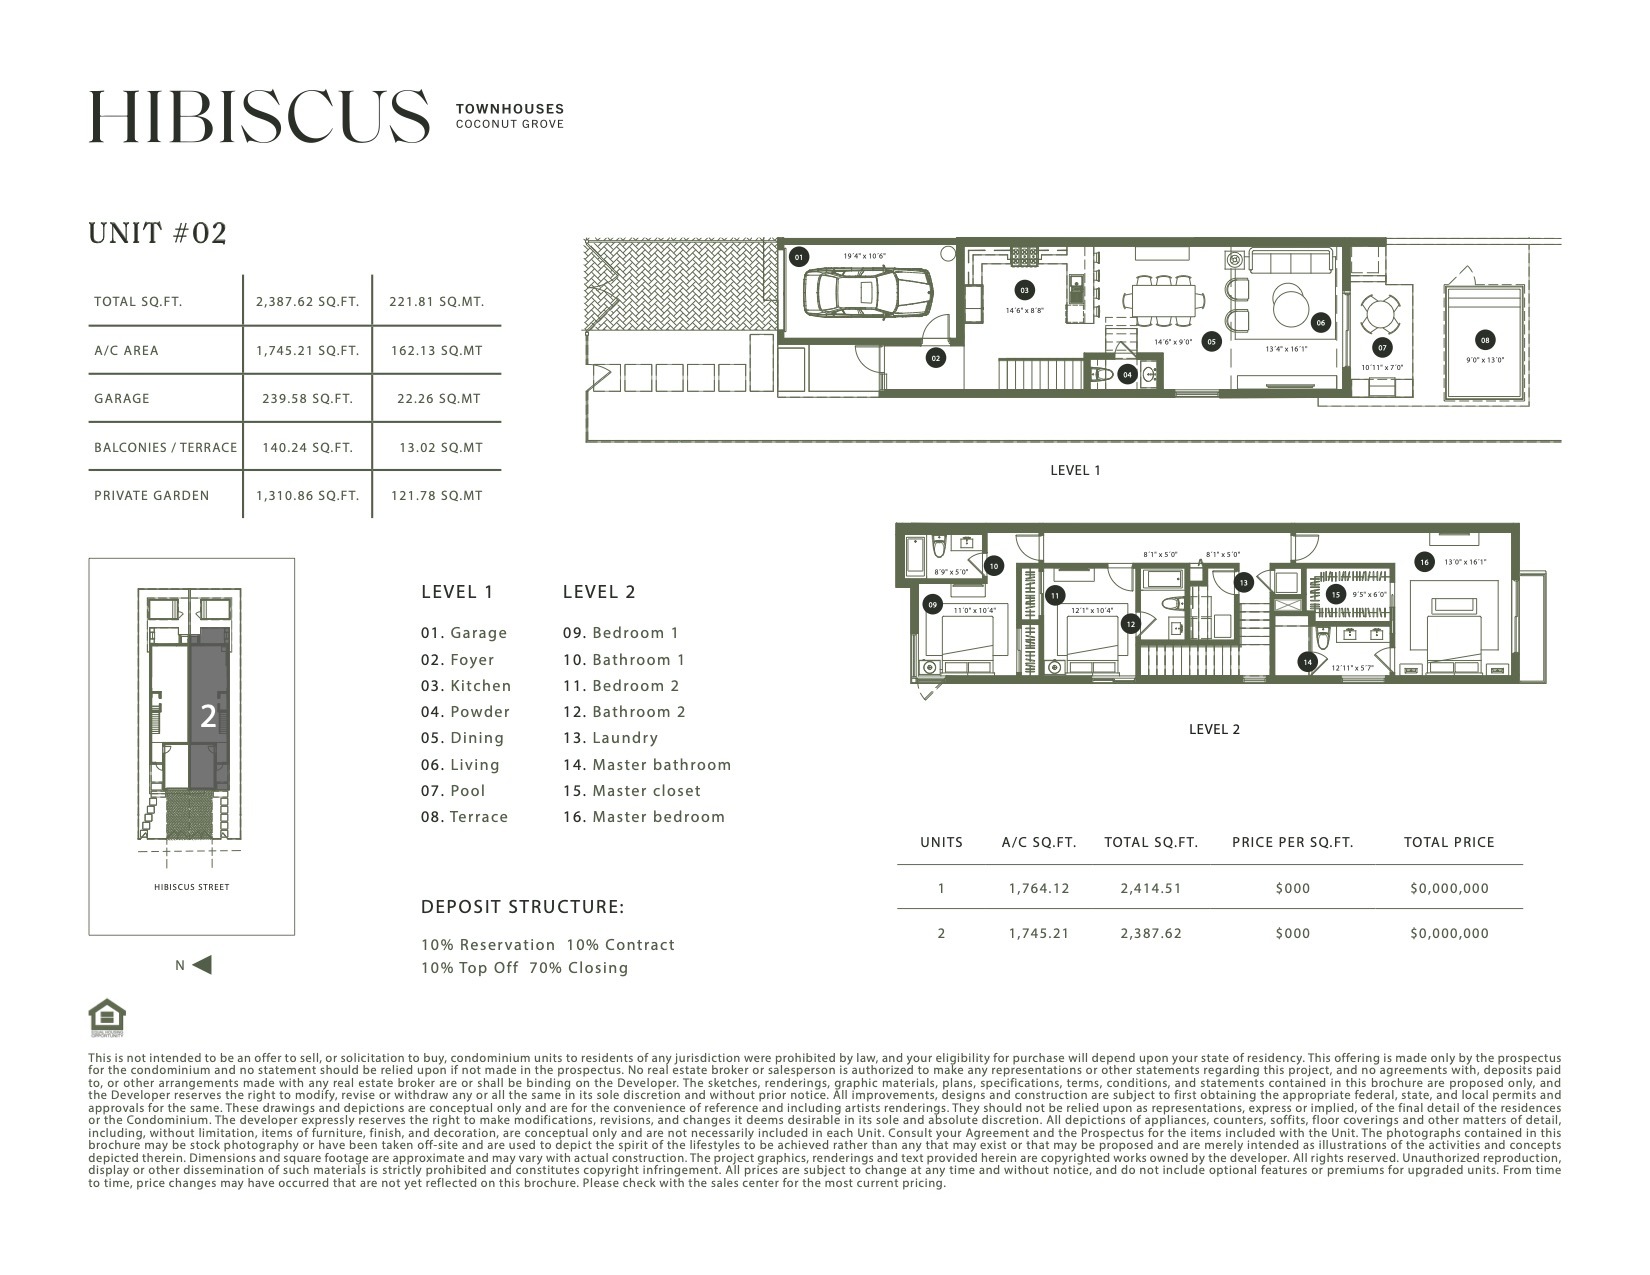 Floor Plan for Hibiscus Townhomes Coconut Grove Floorplans, Unit 2